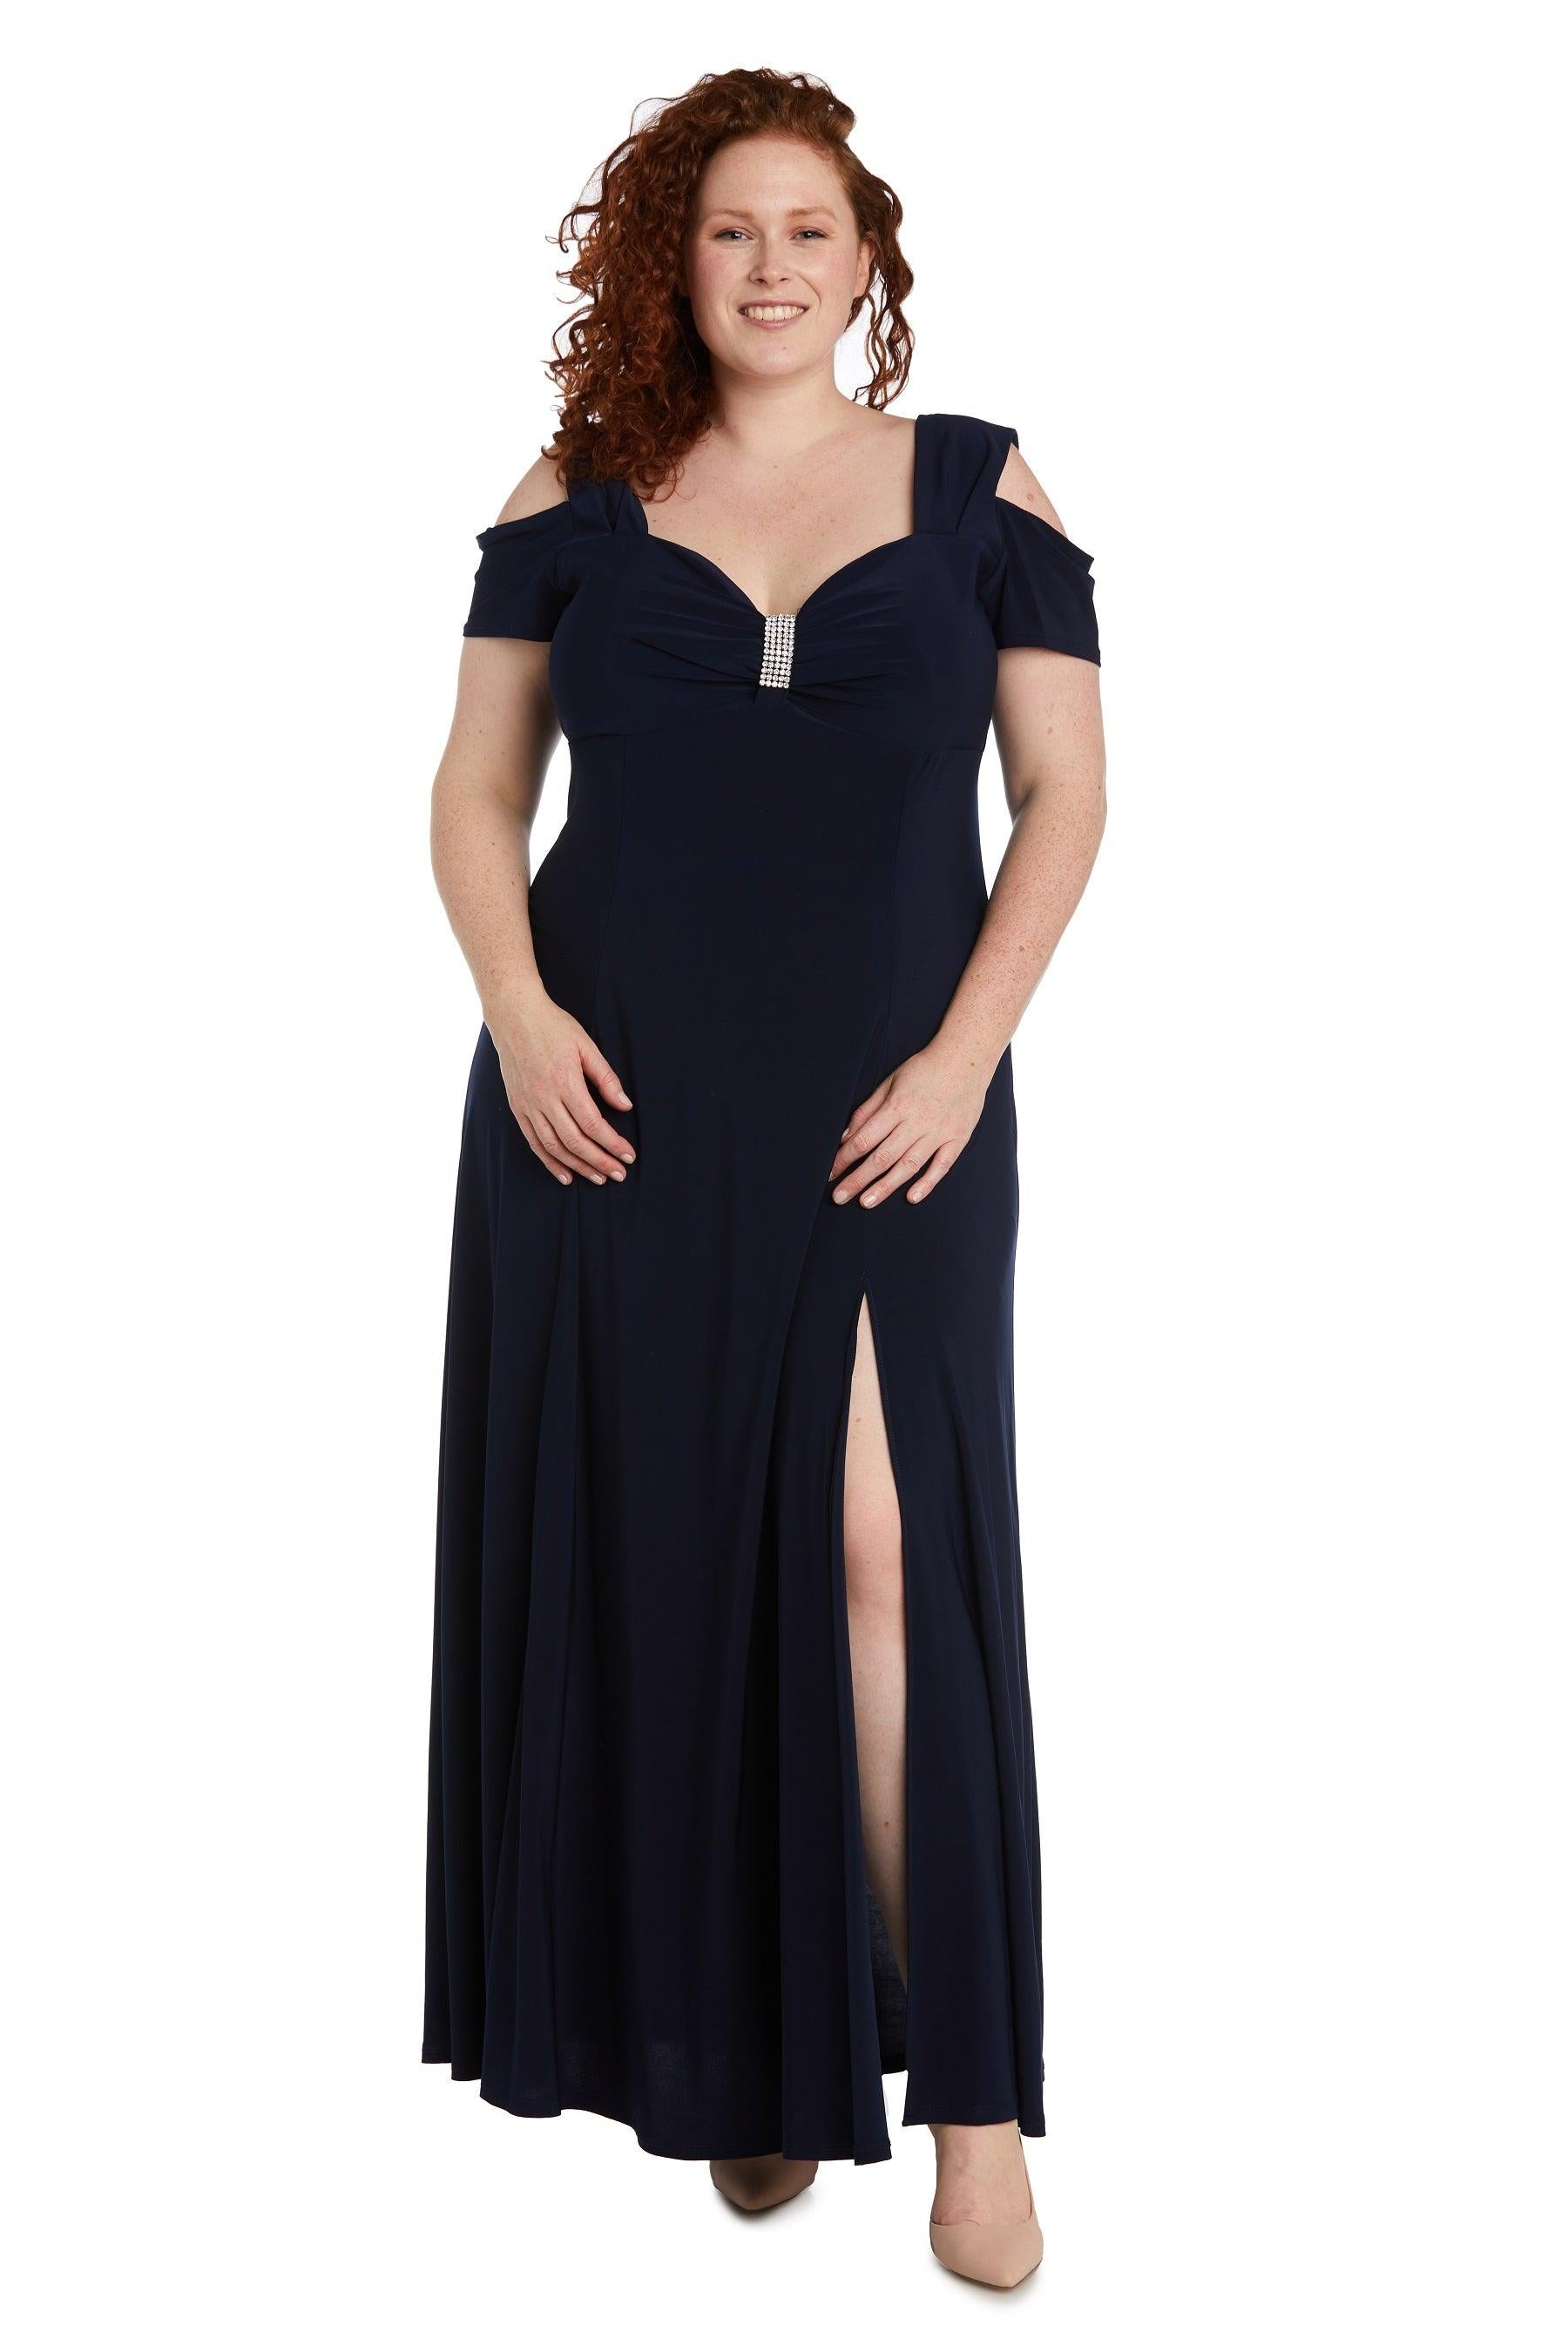 R&M Richards Long Plus Size Formal Evening Dress 1367W - The Dress Outlet